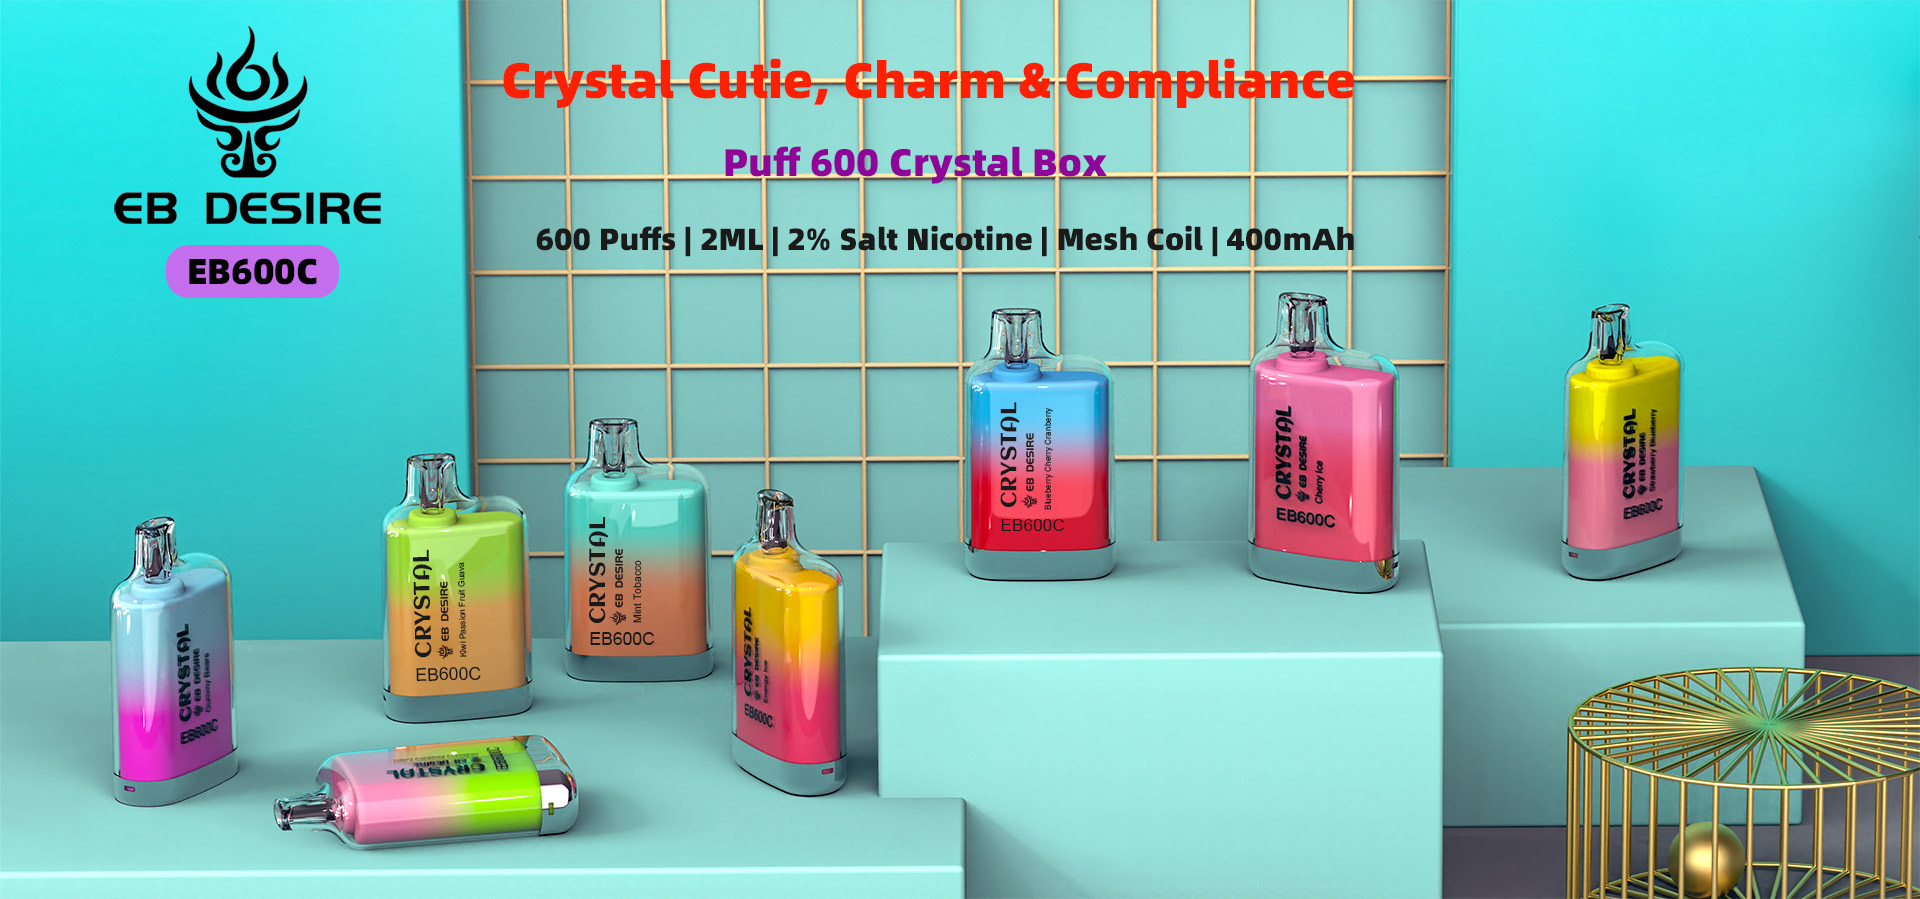 I-EB DESIRE Puff 600 Crystal Box Charming Vape Disposable (4)